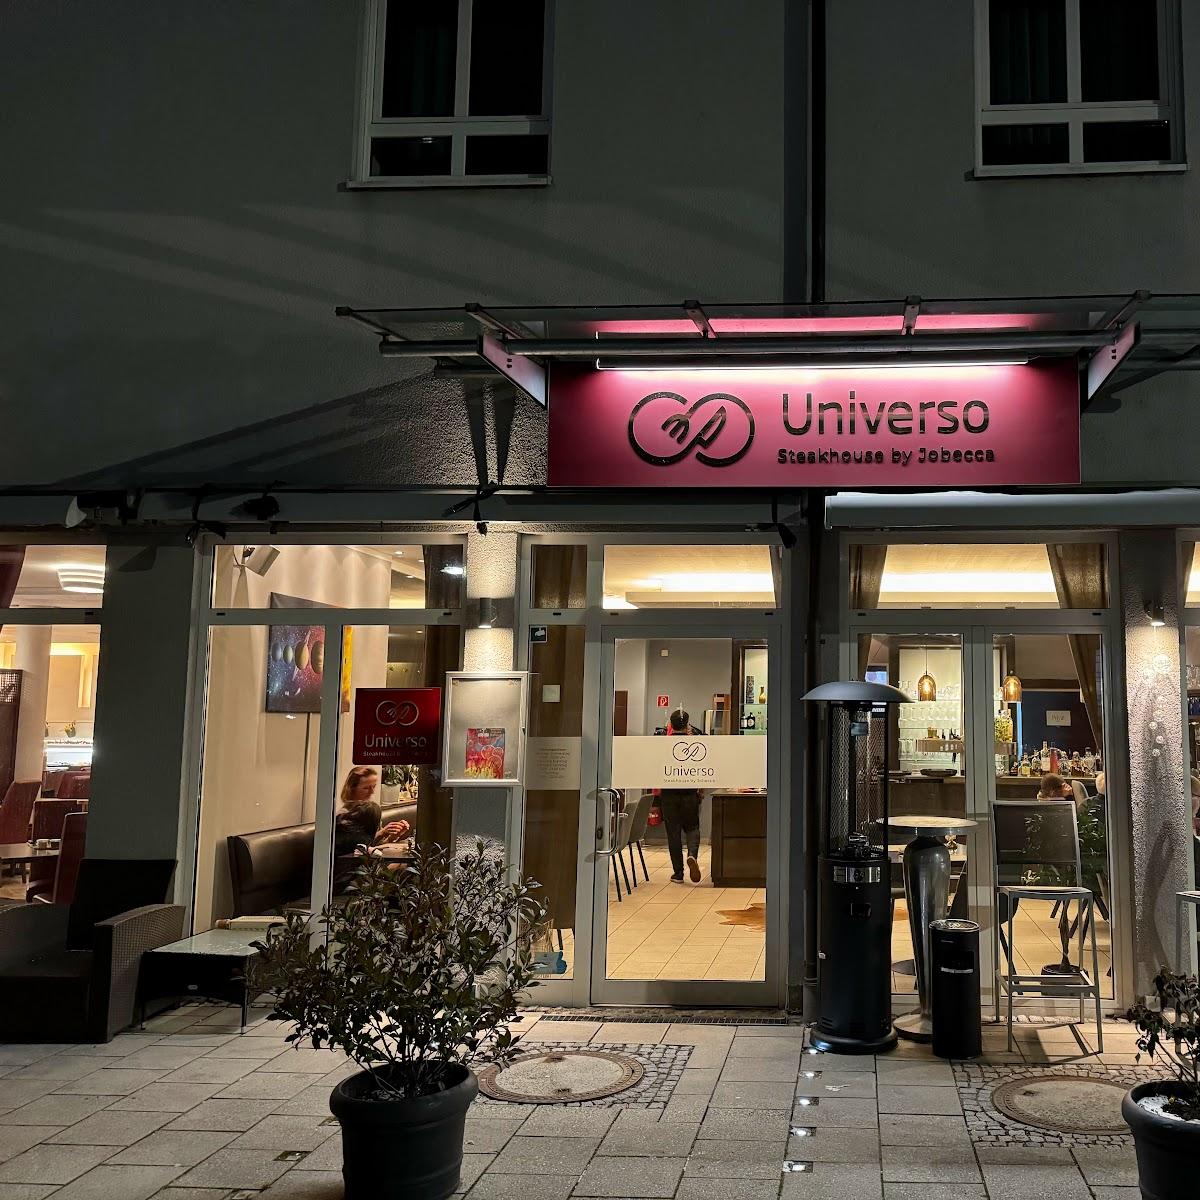 Restaurant "Universo Steakhouse by Jobecca" in Gersthofen